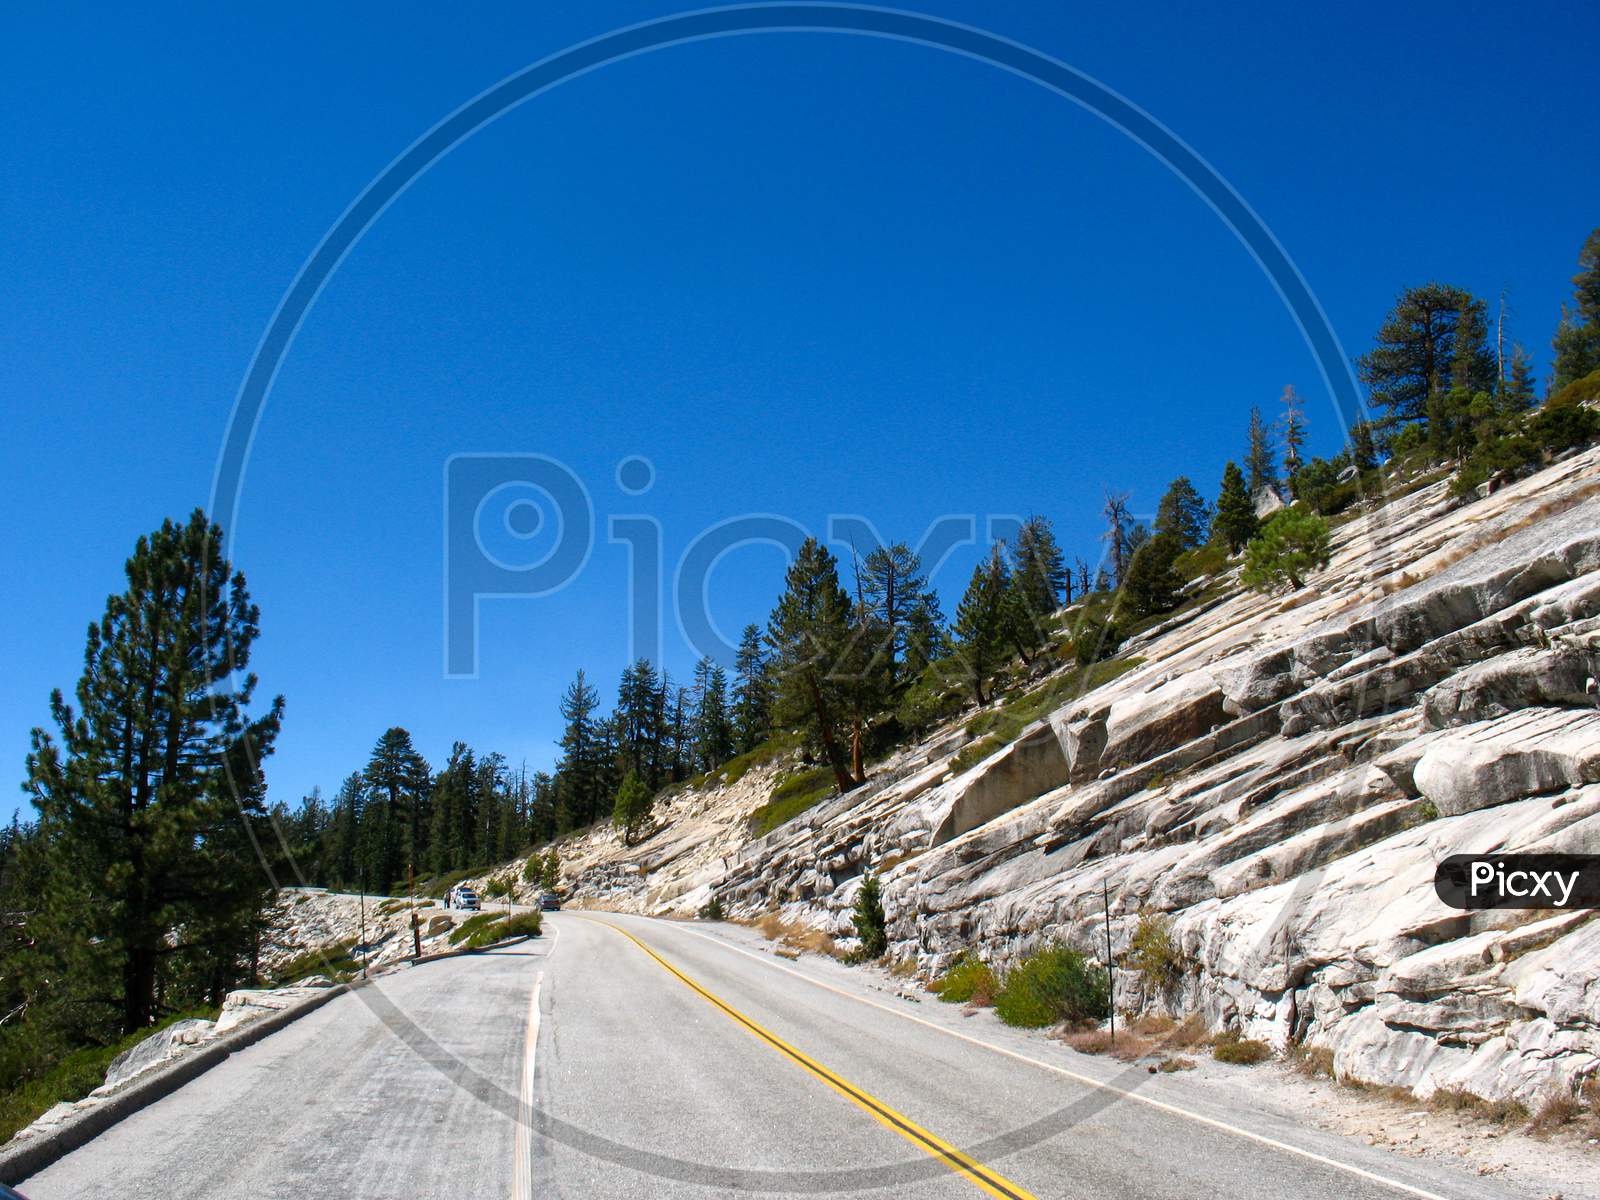 Image Of Yosemite National Park Tioga Pass California Yy Picxy